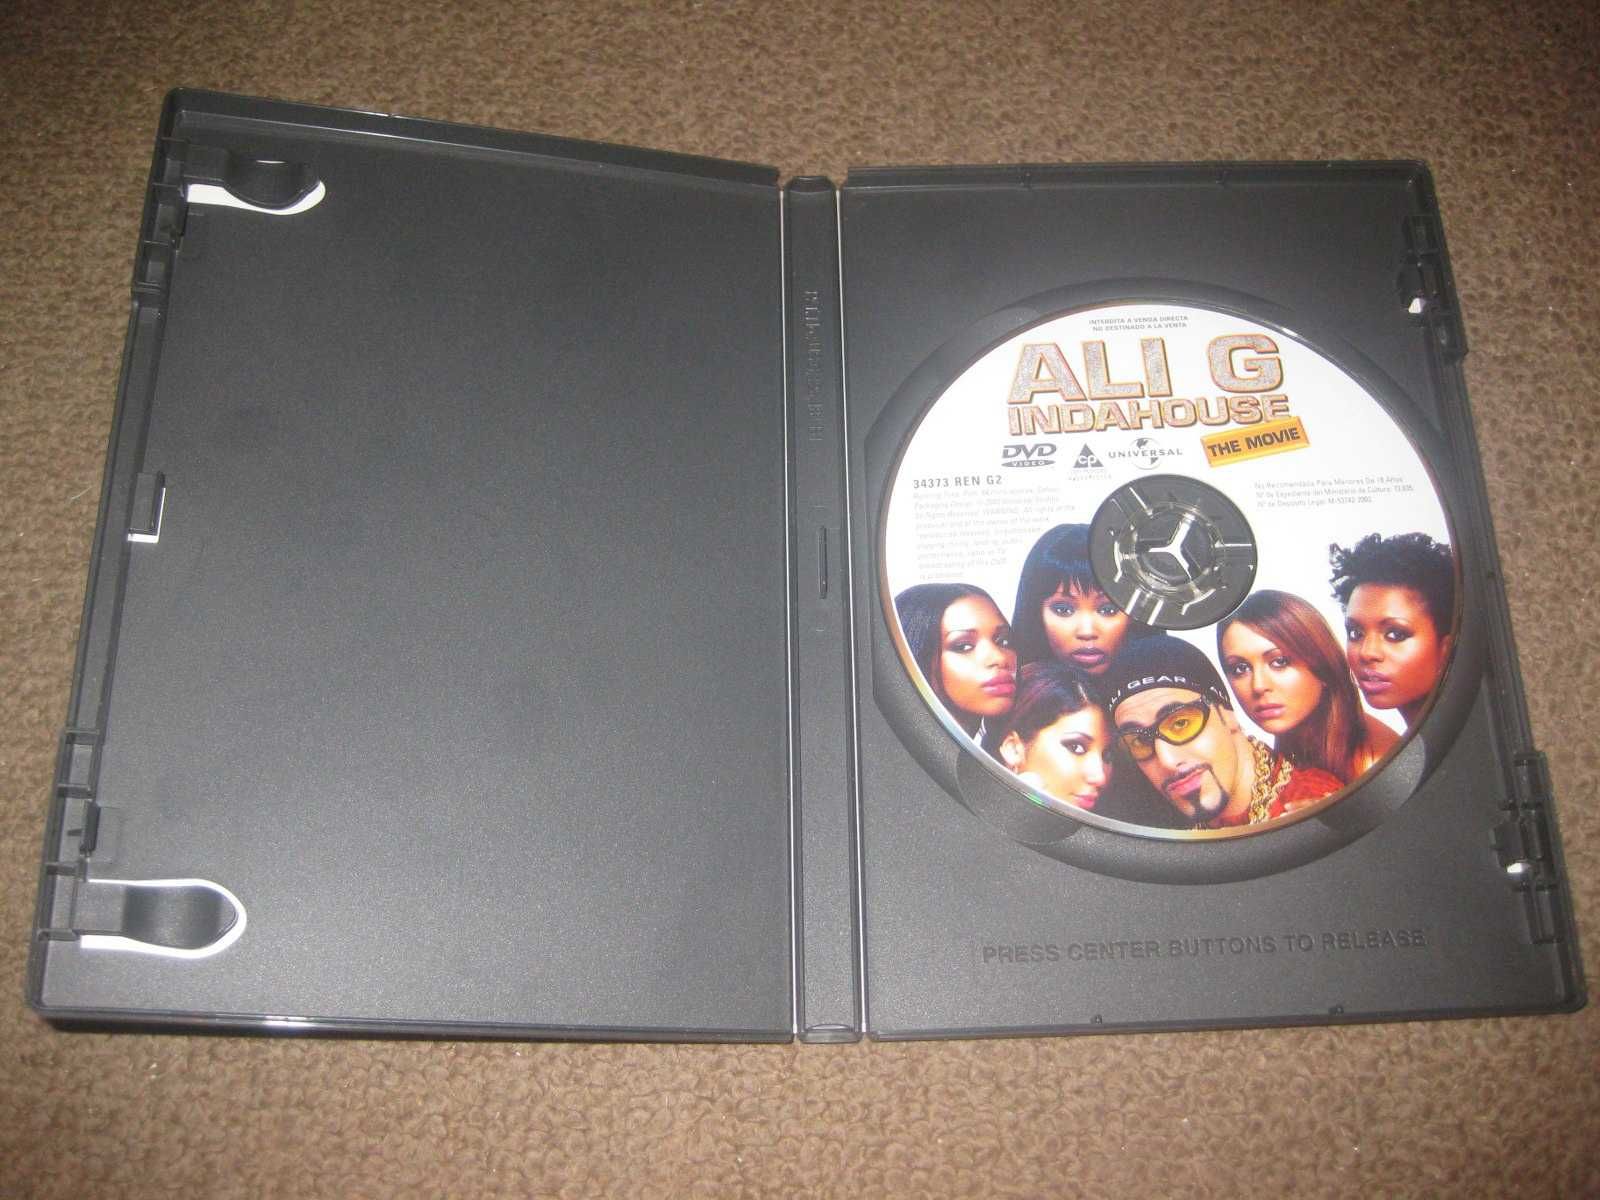 DVD "Ali G: O Filme" com Sacha Baron Cohen